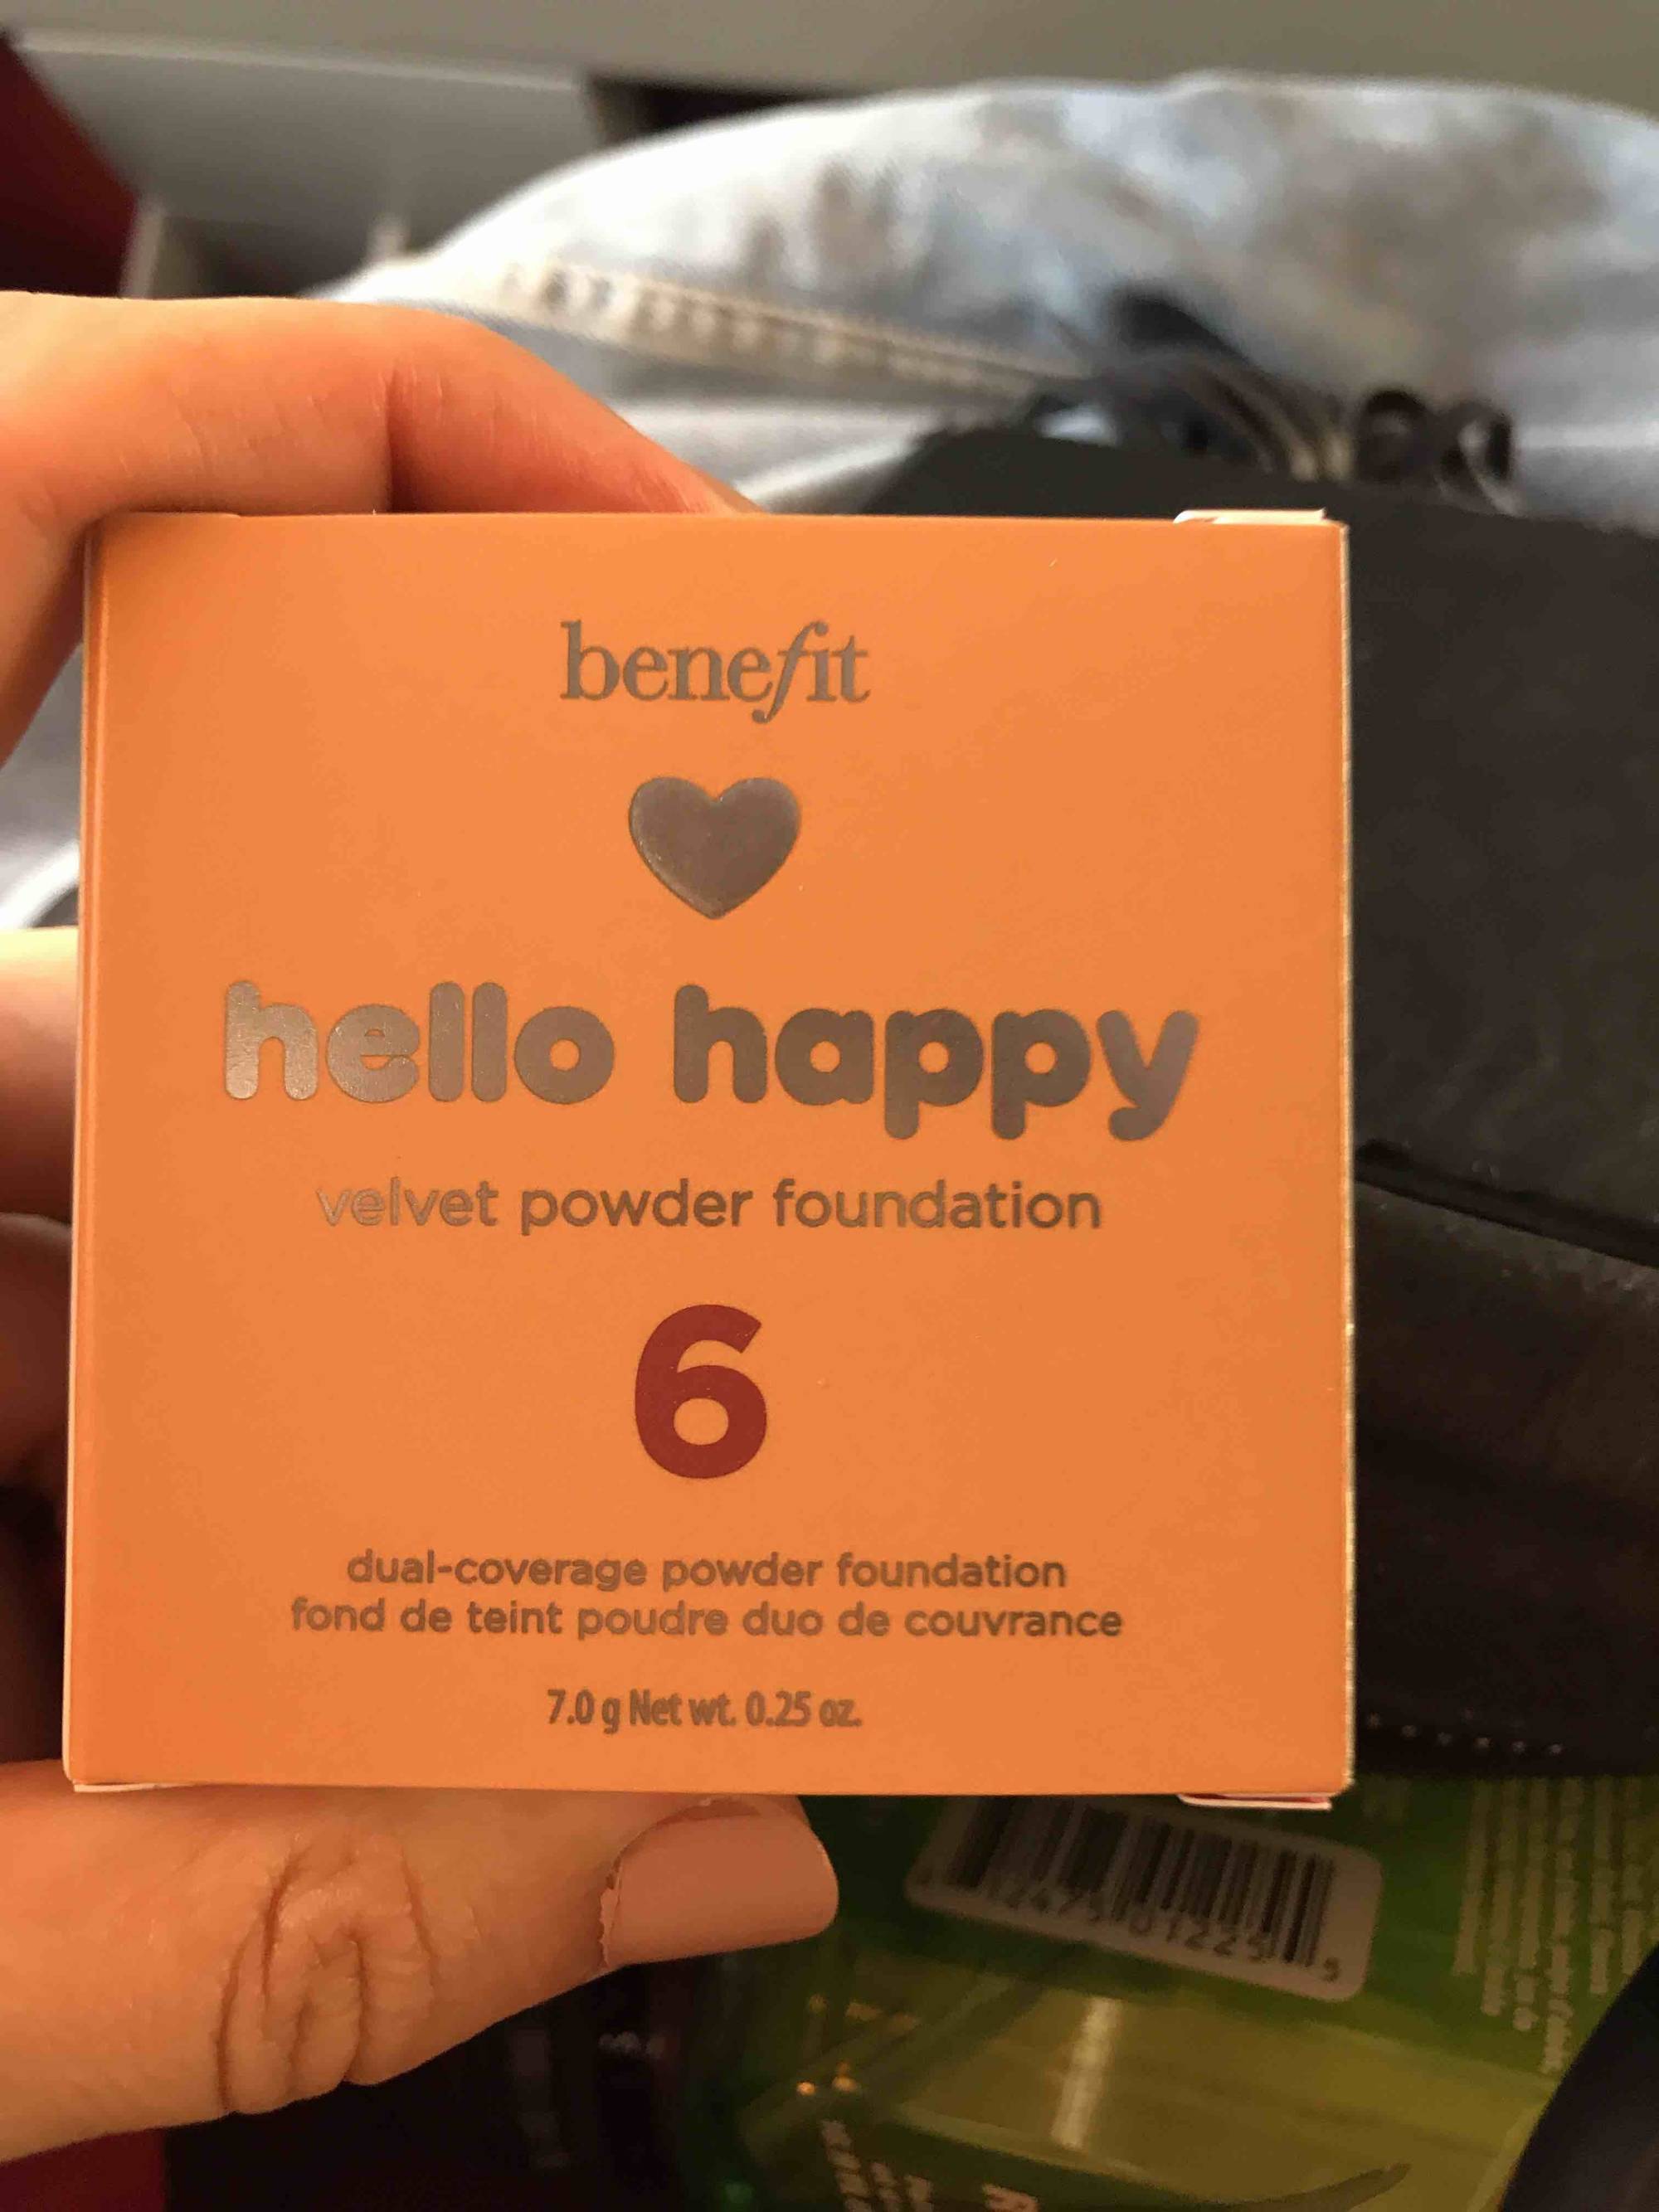 BENEFIT - Hello happy - Velvet powder foundation 6